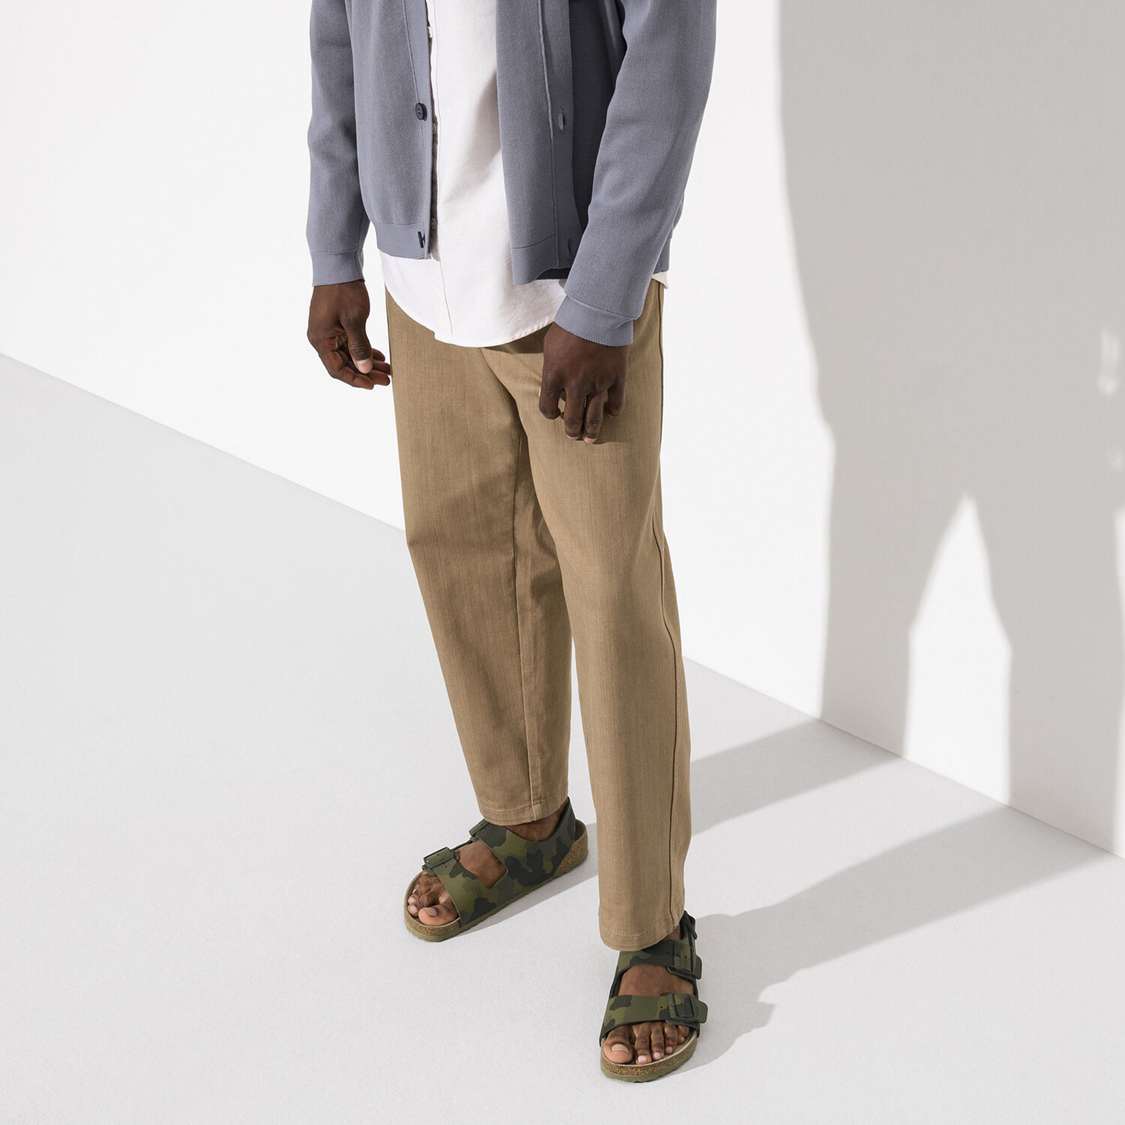 Camo Green Birkenstock Milano Soft Footbed Birko-Flor Men's Two Strap Sandals | n2OL1uOaWUl